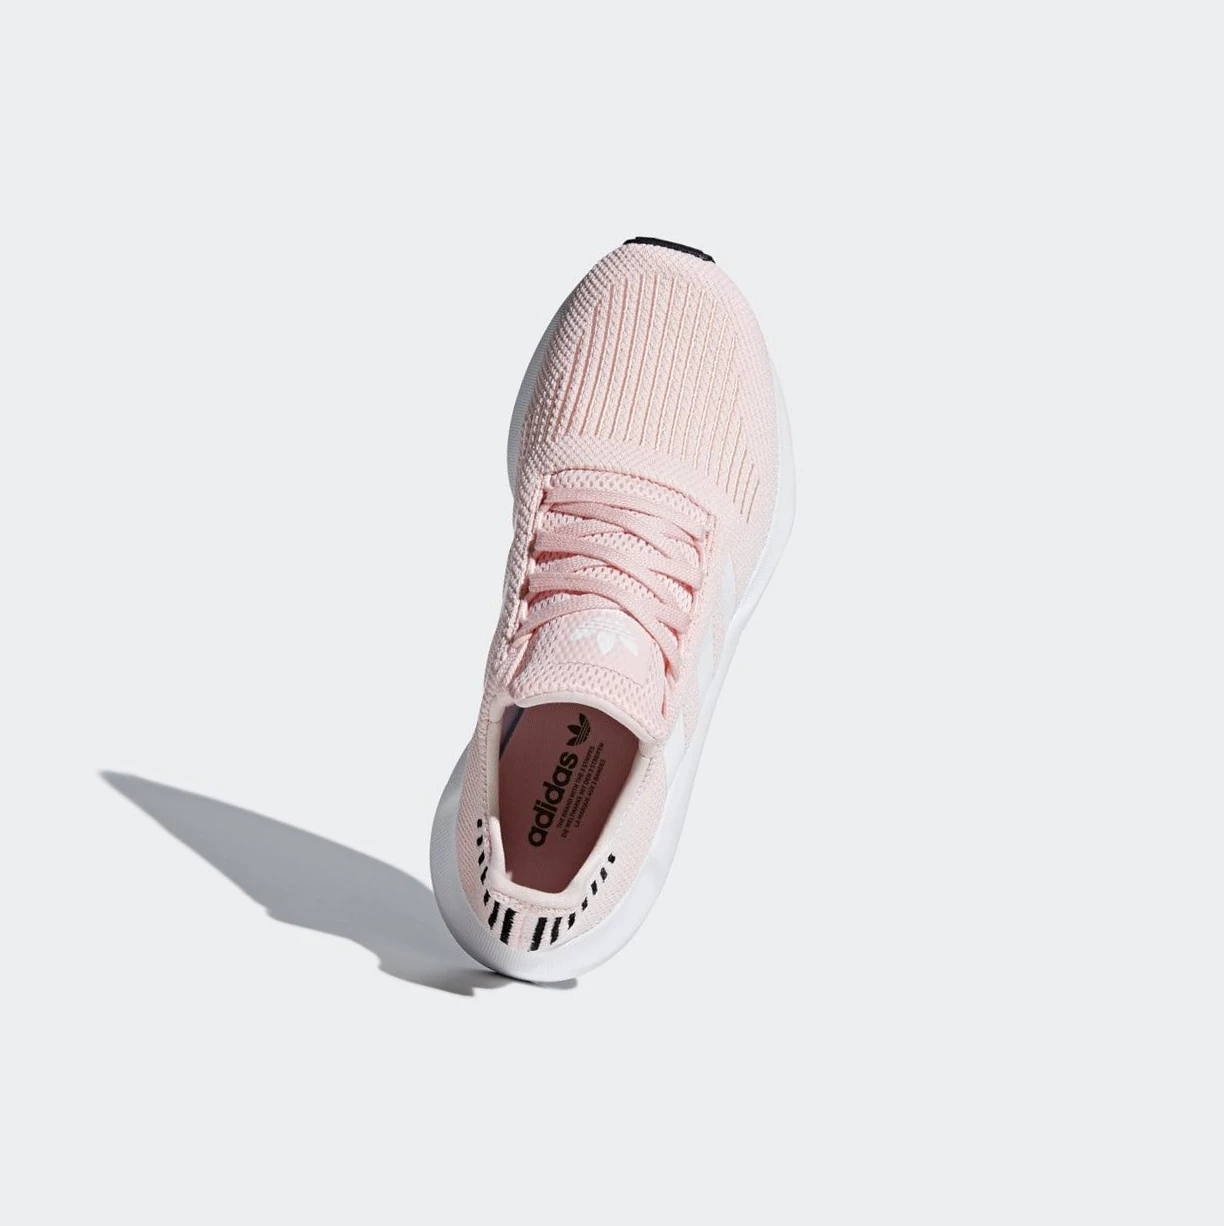 Originálne Topánky Adidas Swift Run Damske Ruzove | 487SKUALEIH